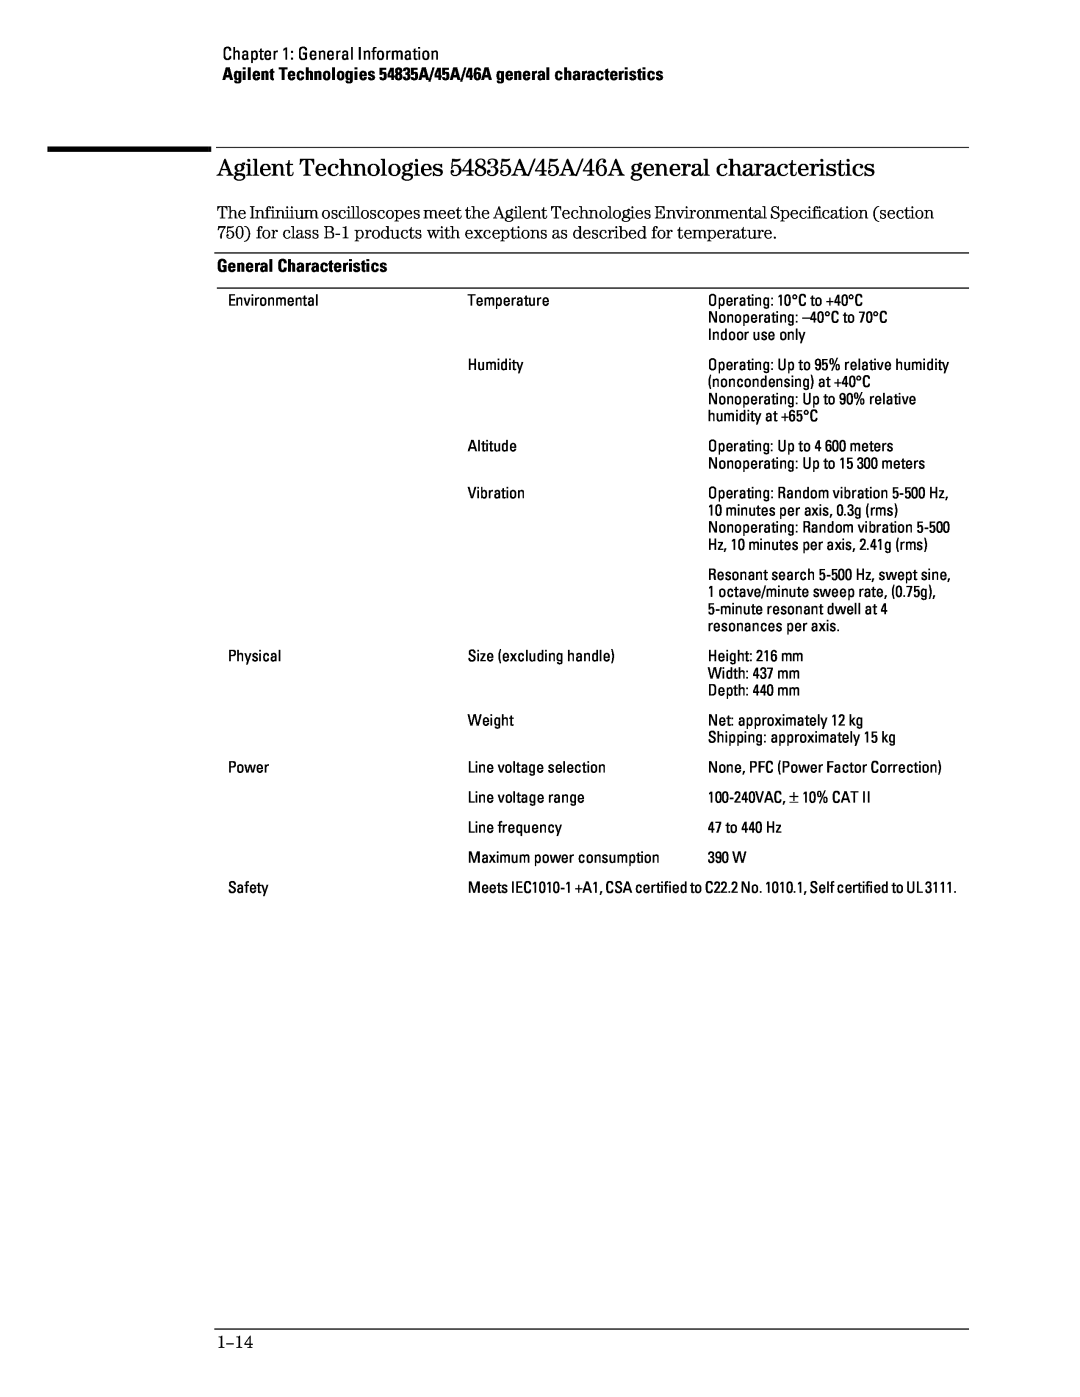 Agilent Technologies manual Agilent Technologies 54835A/45A/46A general characteristics, General Information 